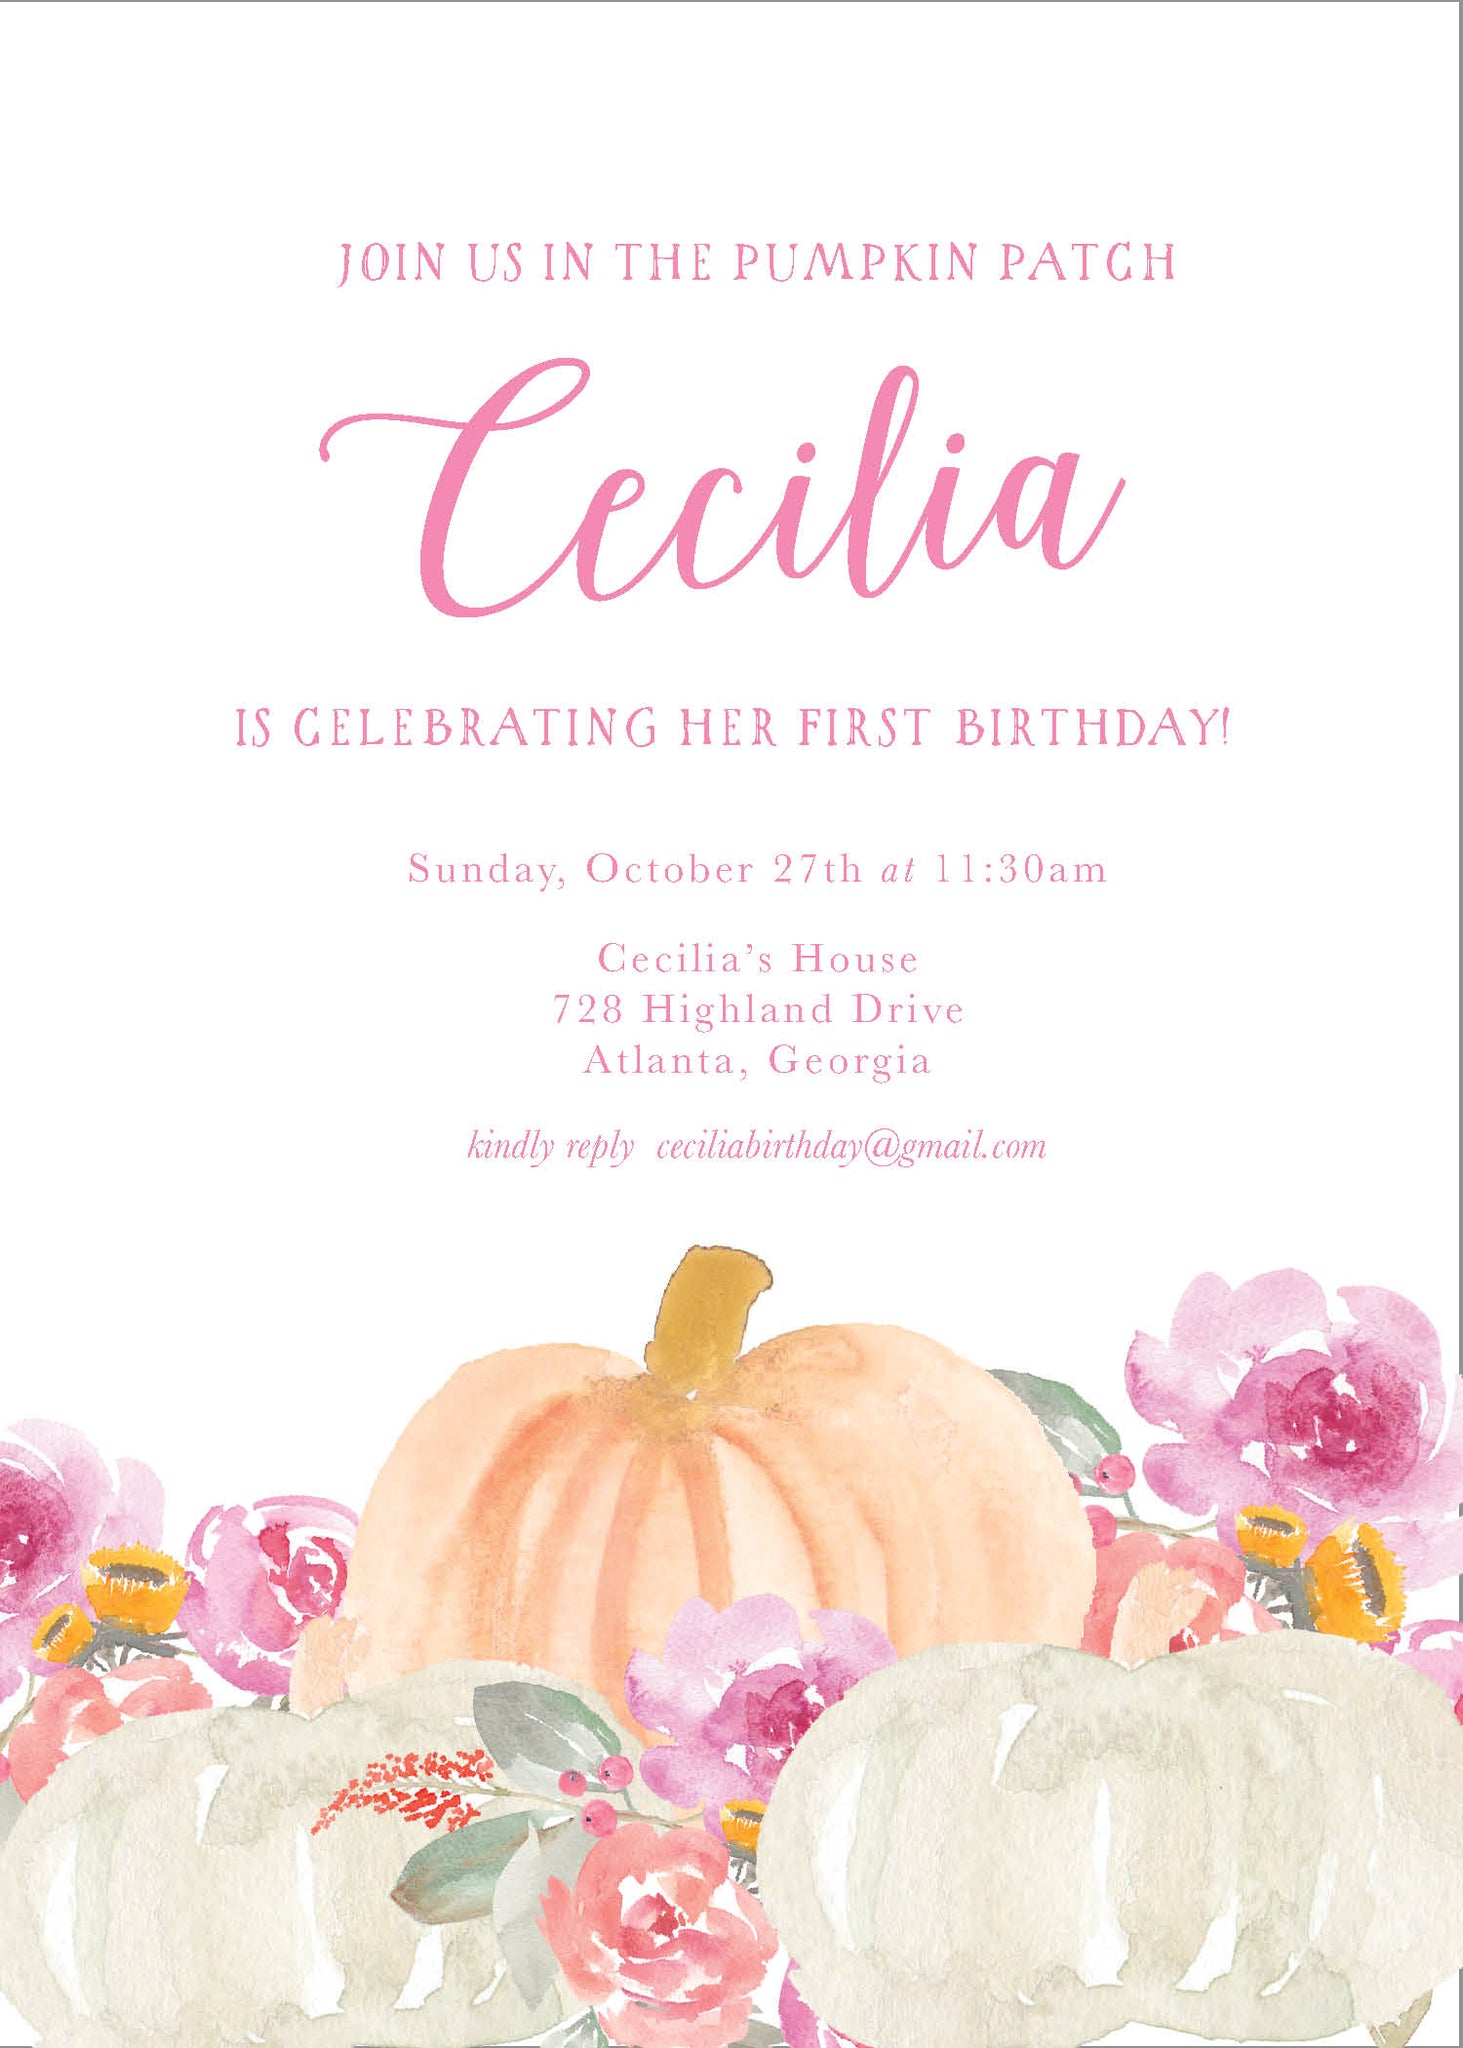 Pumpkin Patch Girl Birthday Party Invitation